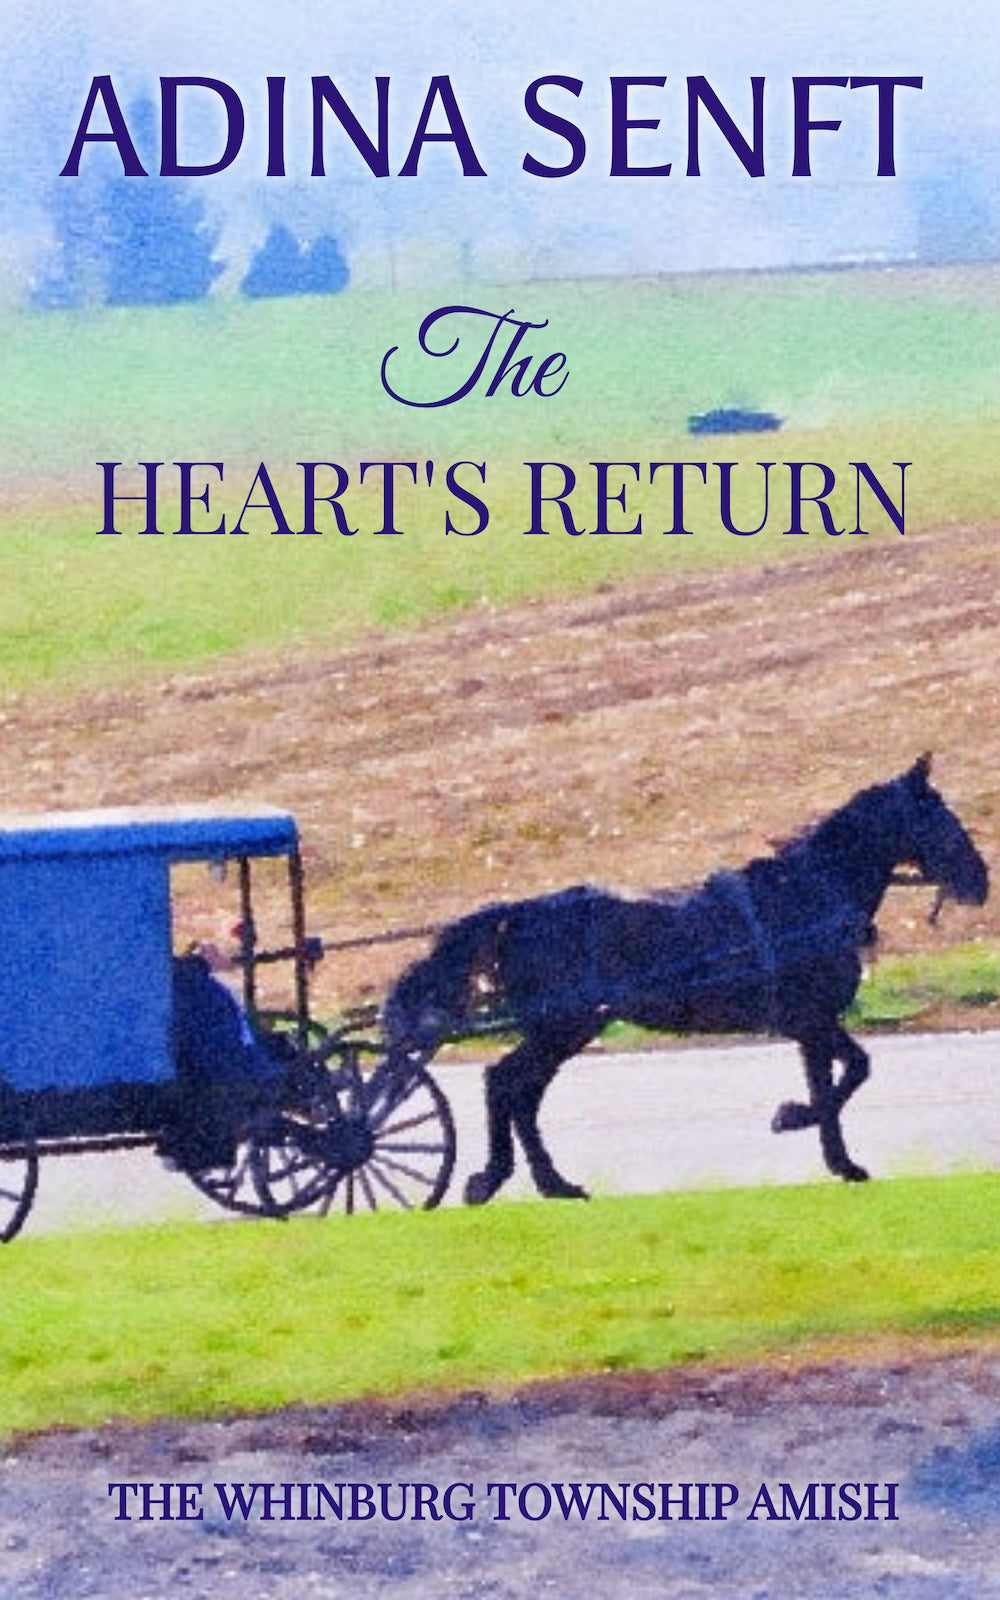 The Heart's Return by Adina Senft, a Whinburg Township Amish romance novella